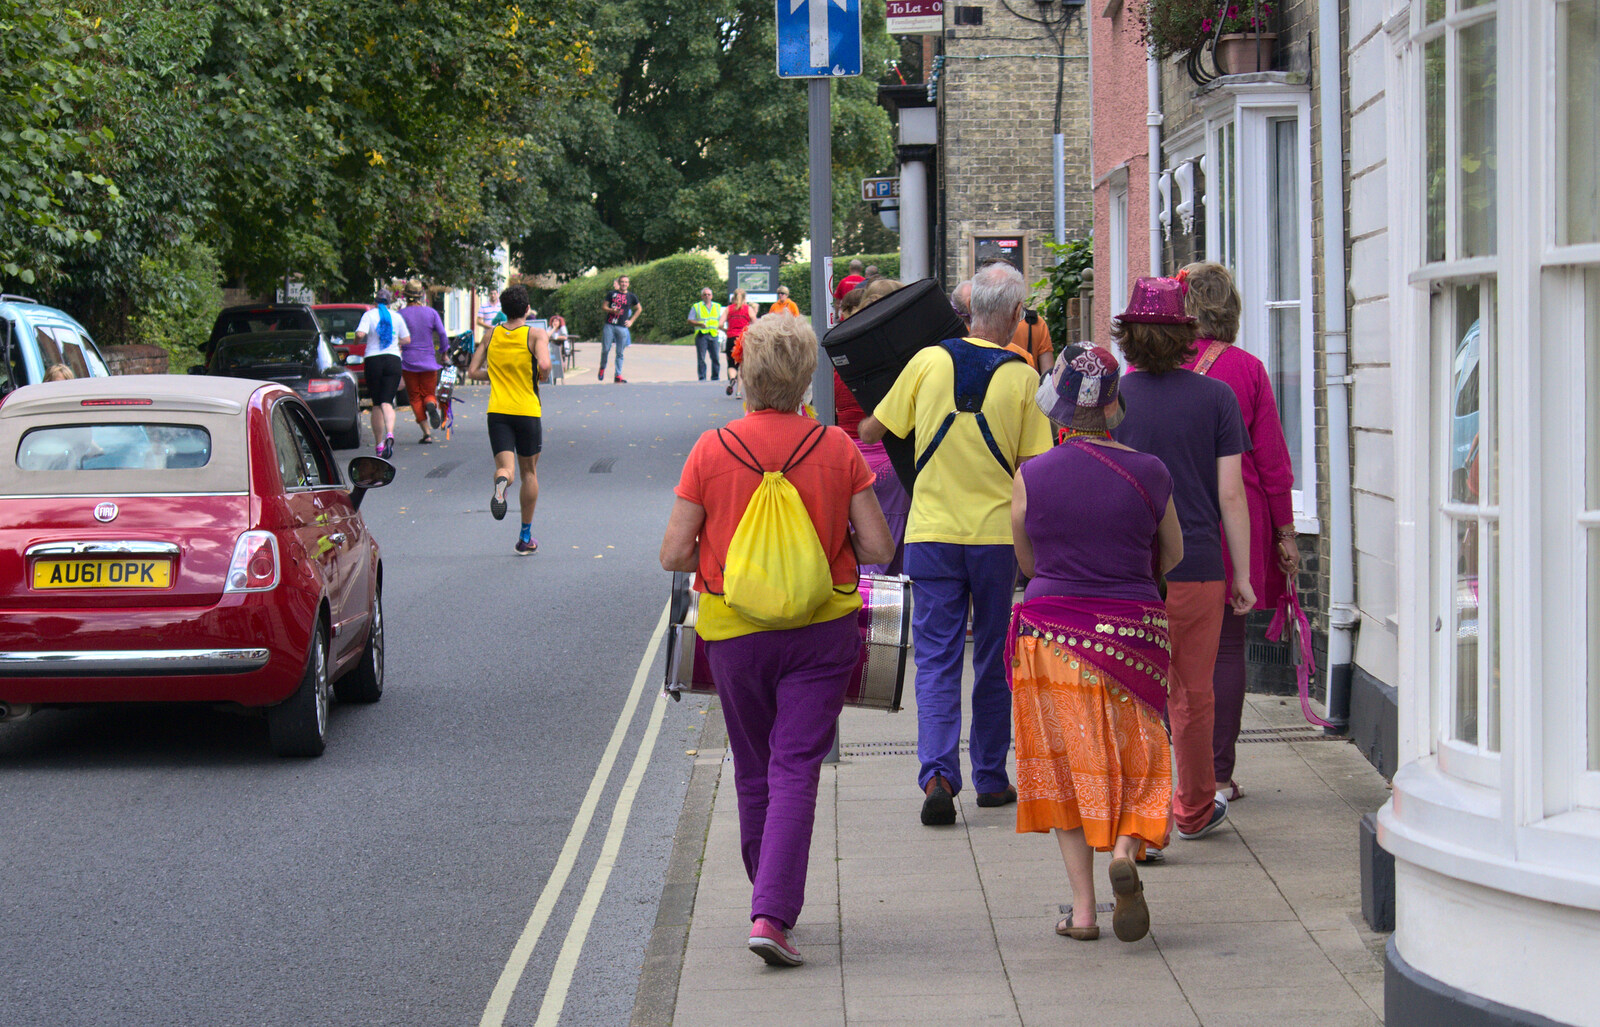 The band heads off up Church Street from The Framlingham 10k Run, Suffolk - 31st August 2014